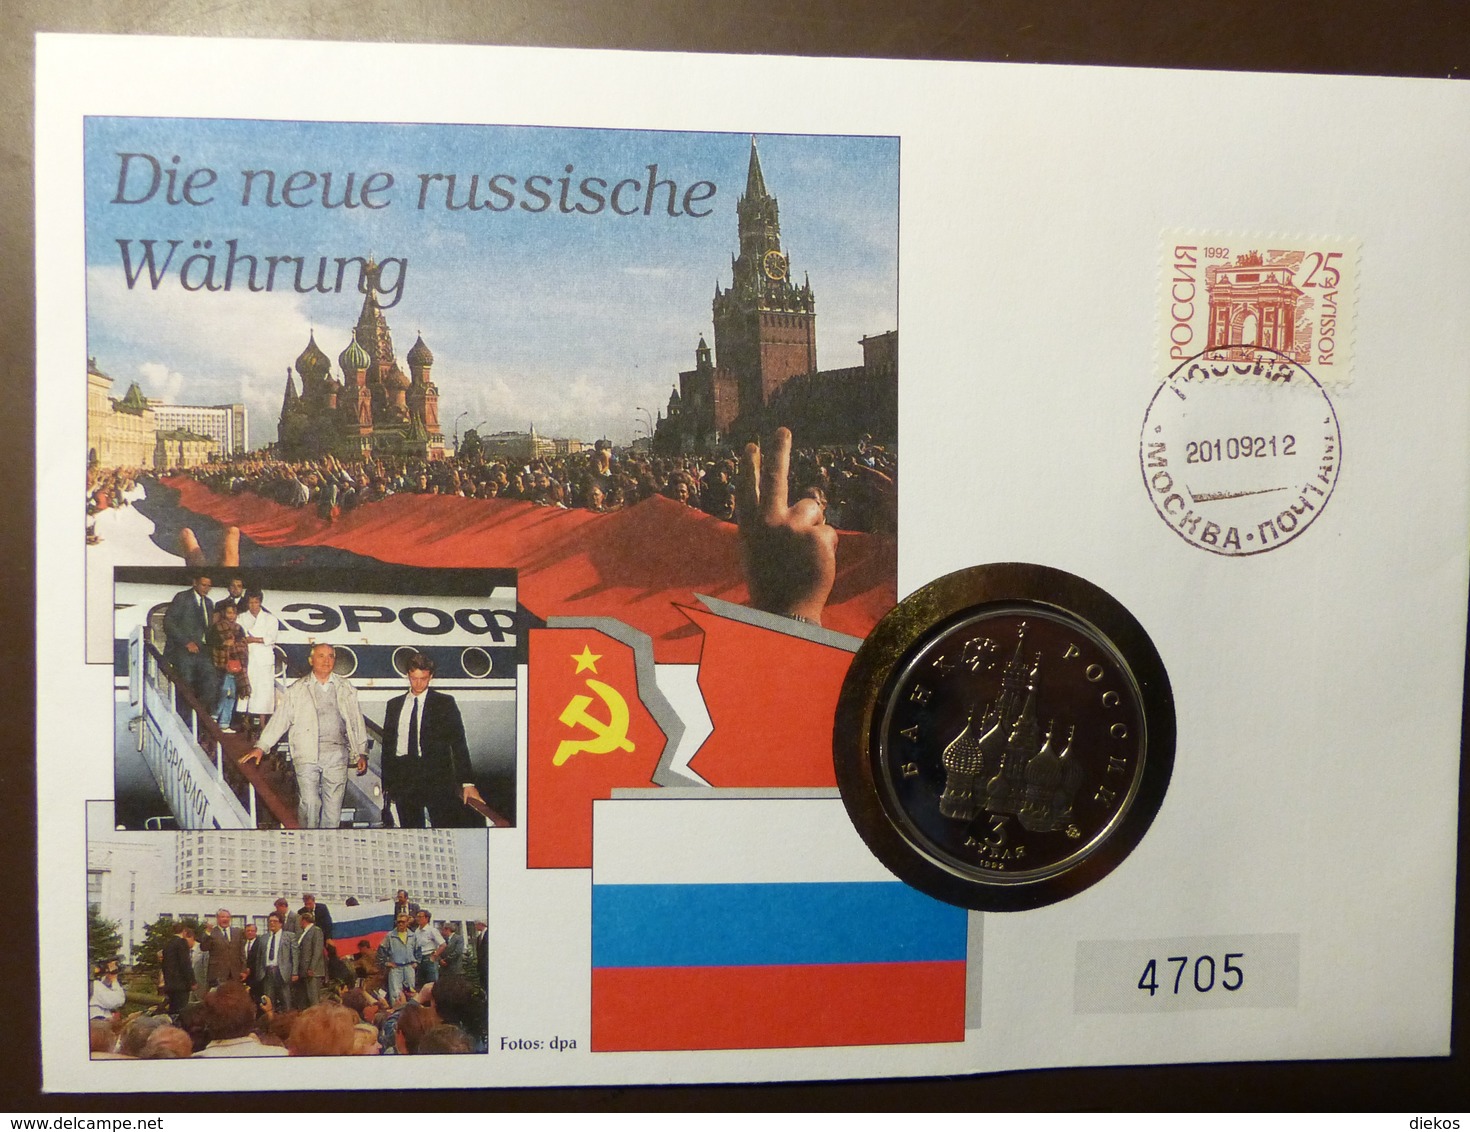 Numisbrief Coin Cover 3 Rubel CuNi.1992 PP Internationales Weltraumjahr  #numis70 - Rusland